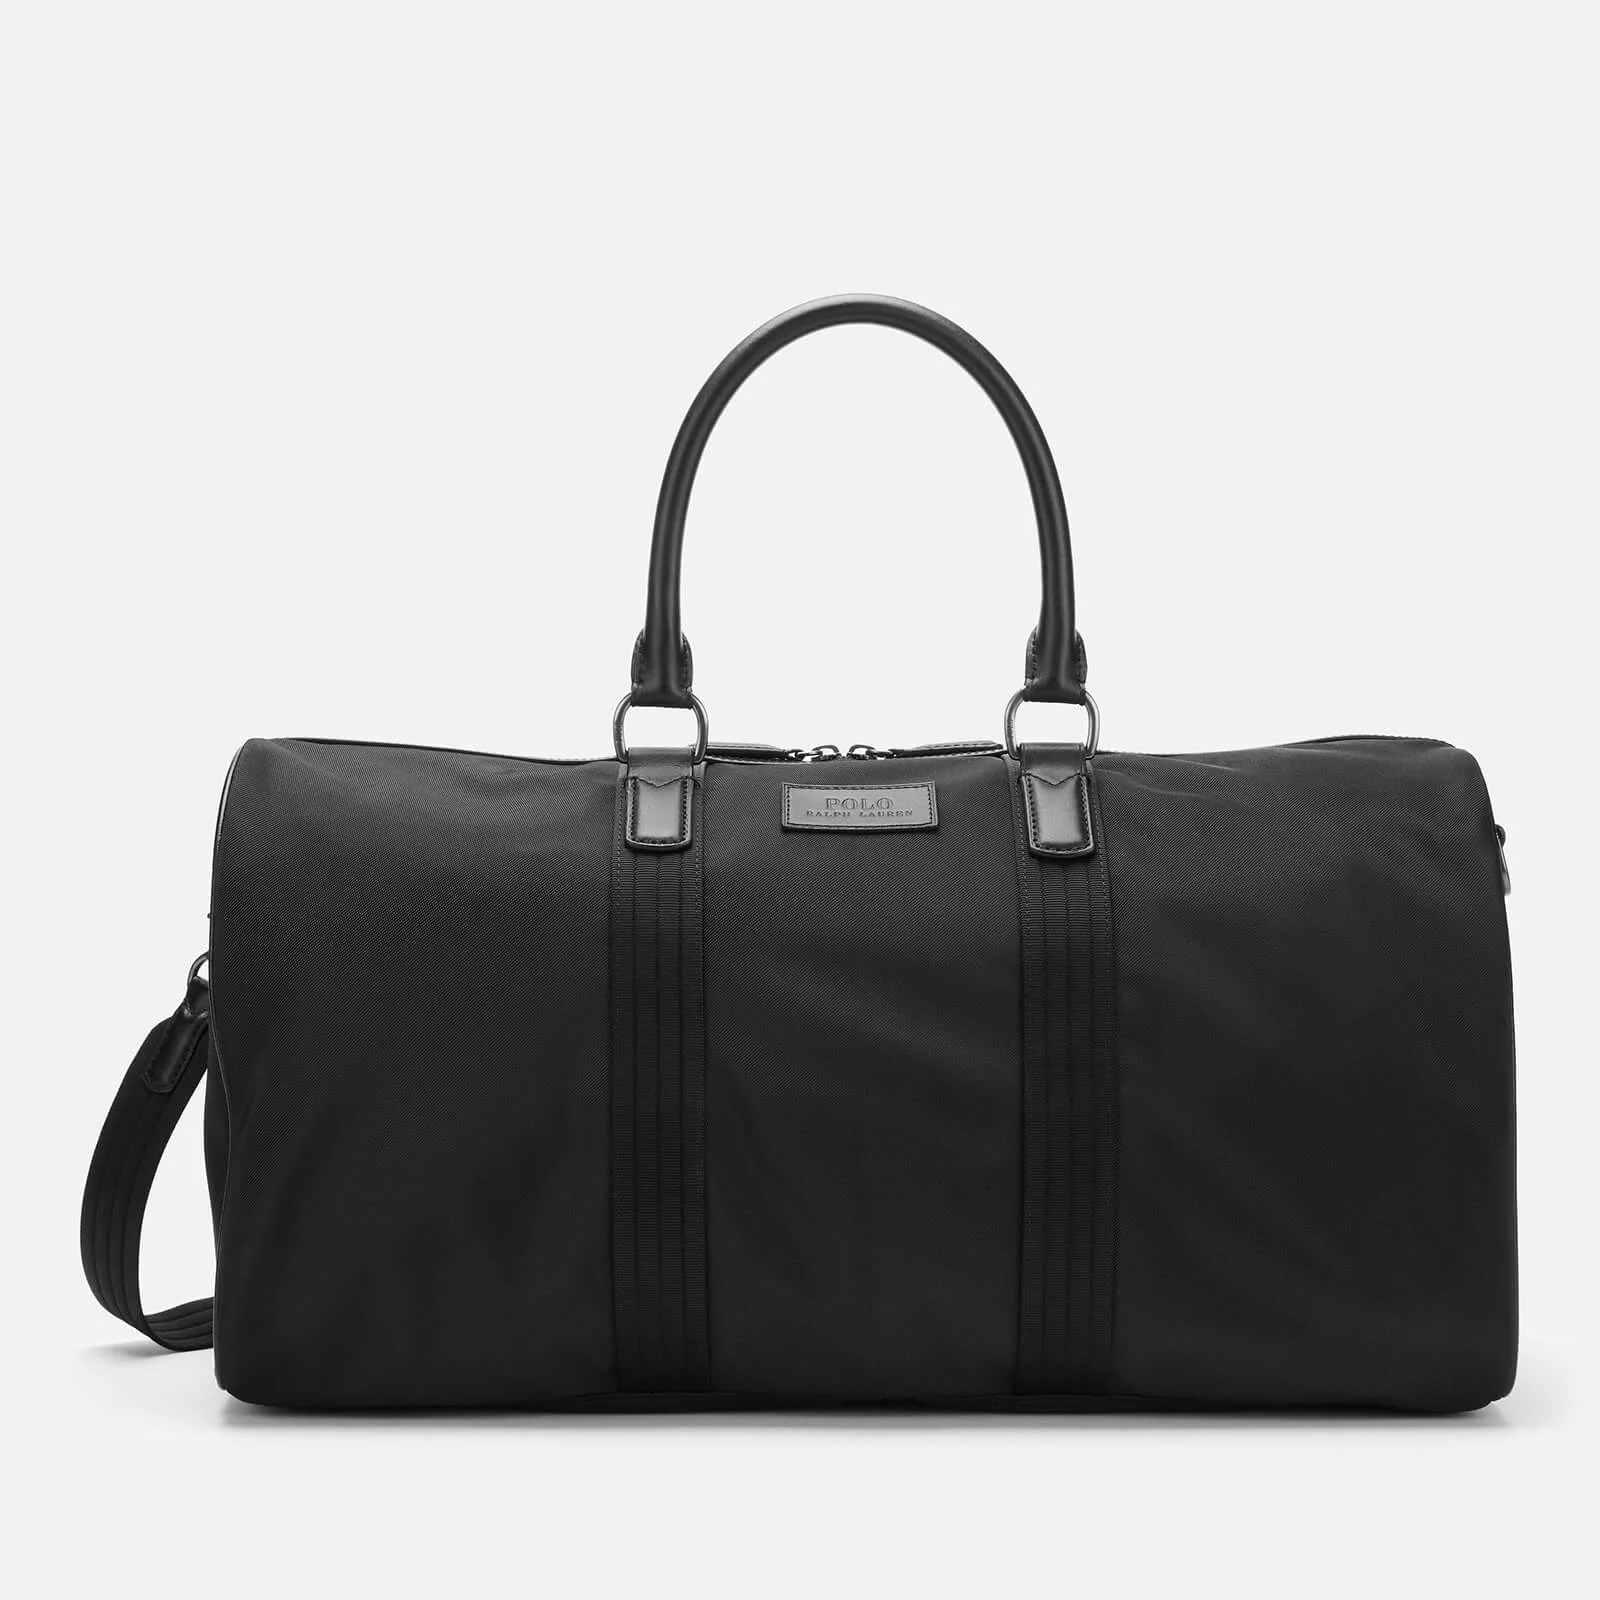 Polo Ralph Lauren Men's Thompson II Duffle Bag - Black Image 1